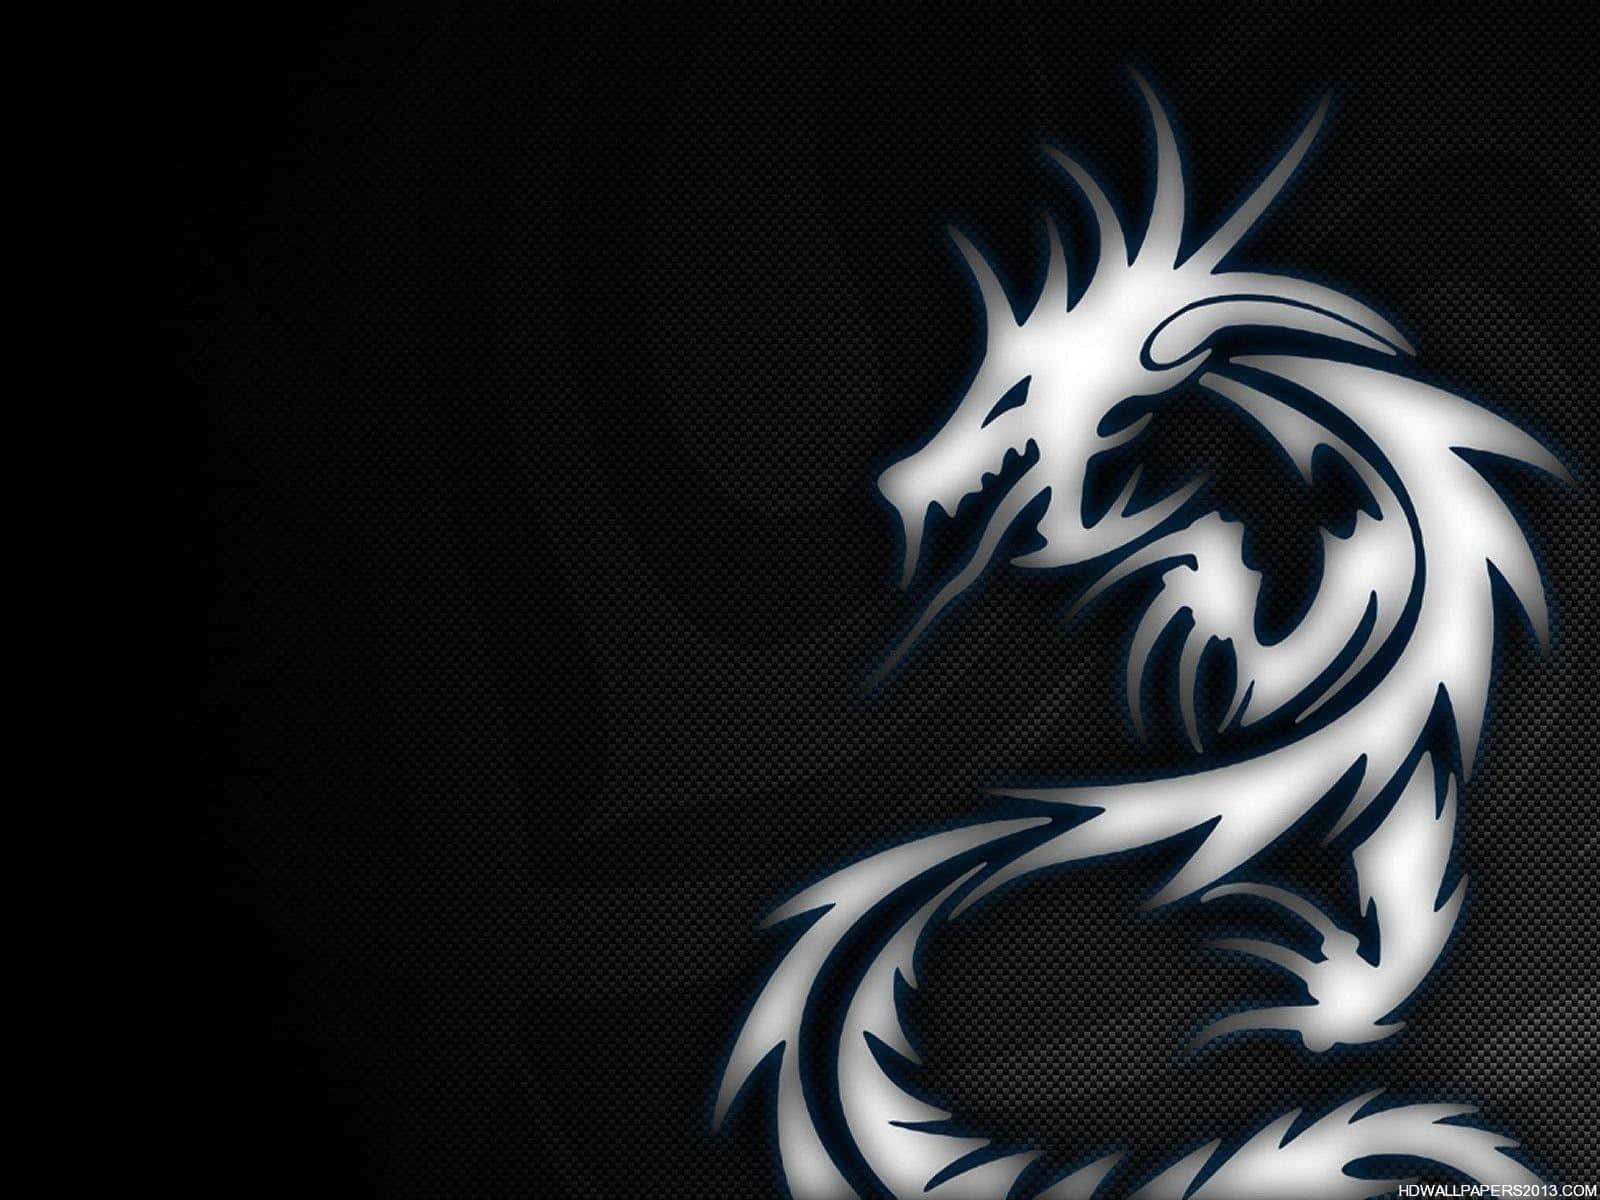 Free Awesome Dragon Wallpaper Downloads, [100+] Awesome Dragon Wallpapers  for FREE 